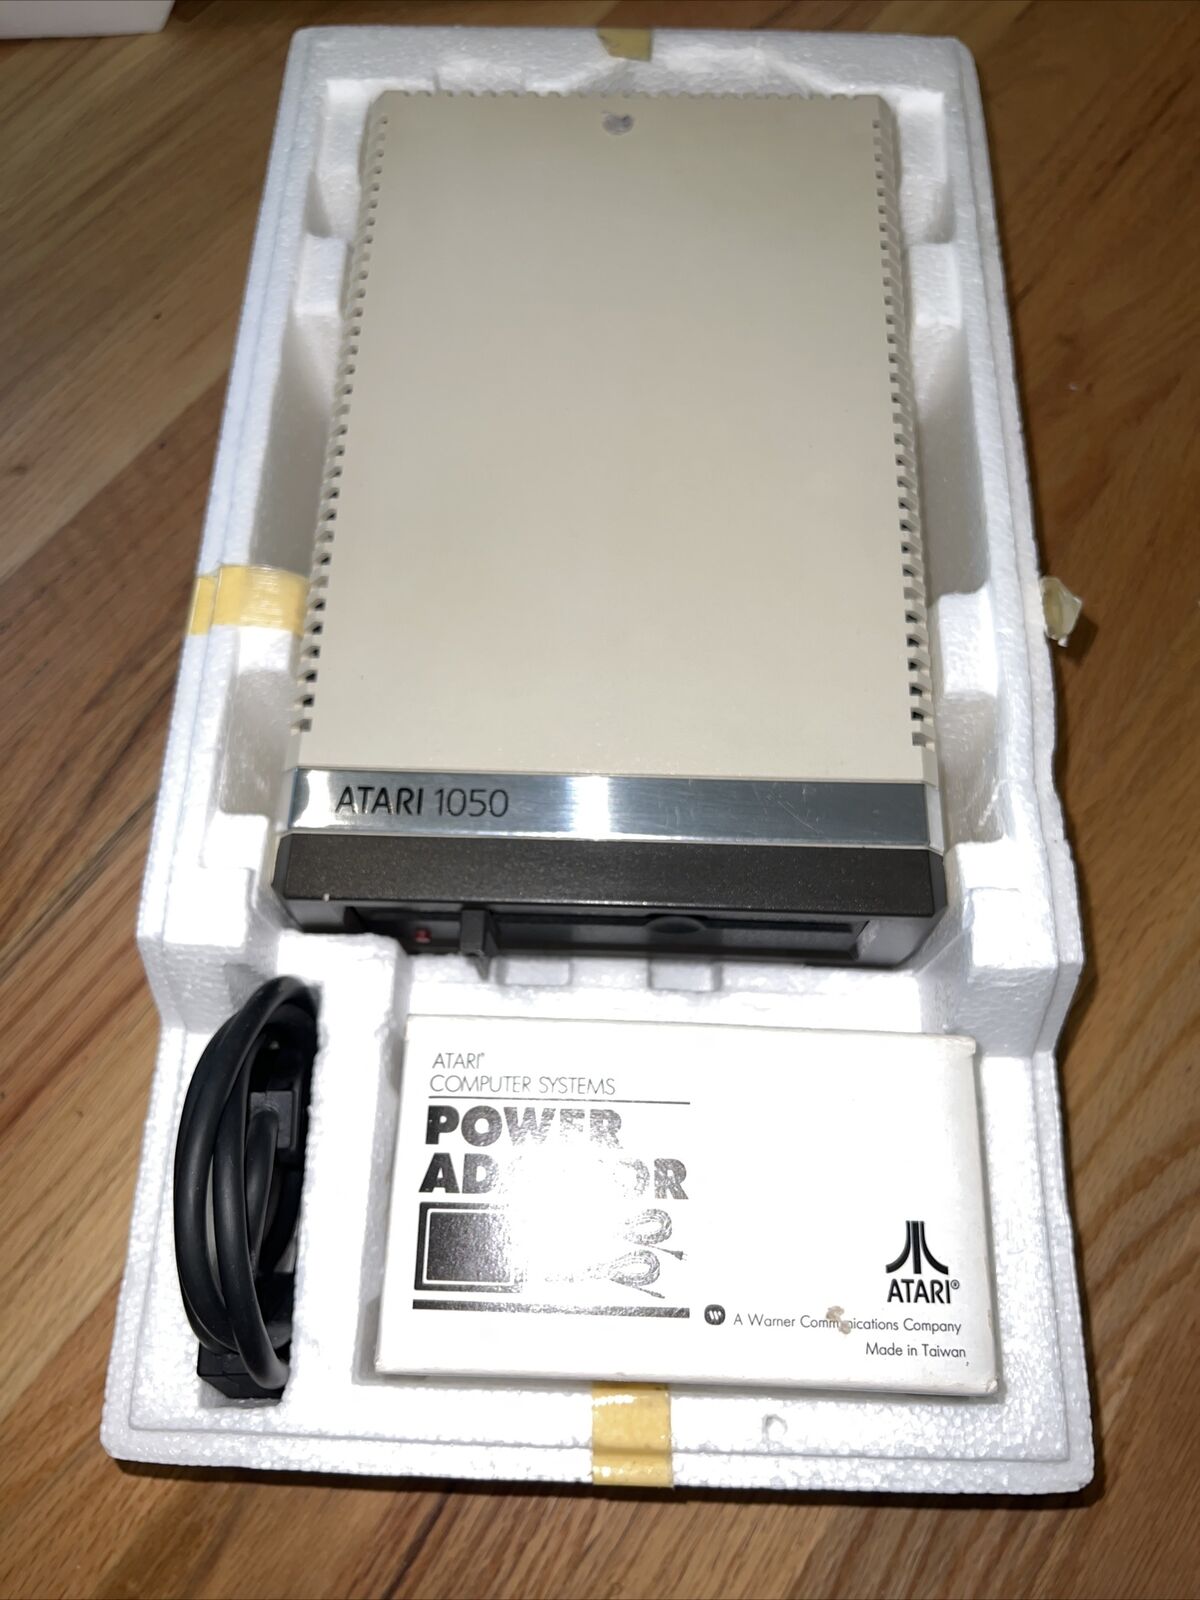 Atari 1050 diskette drive for Atari 800 800XL 130XE 65XE 1200XL.  OEM Box